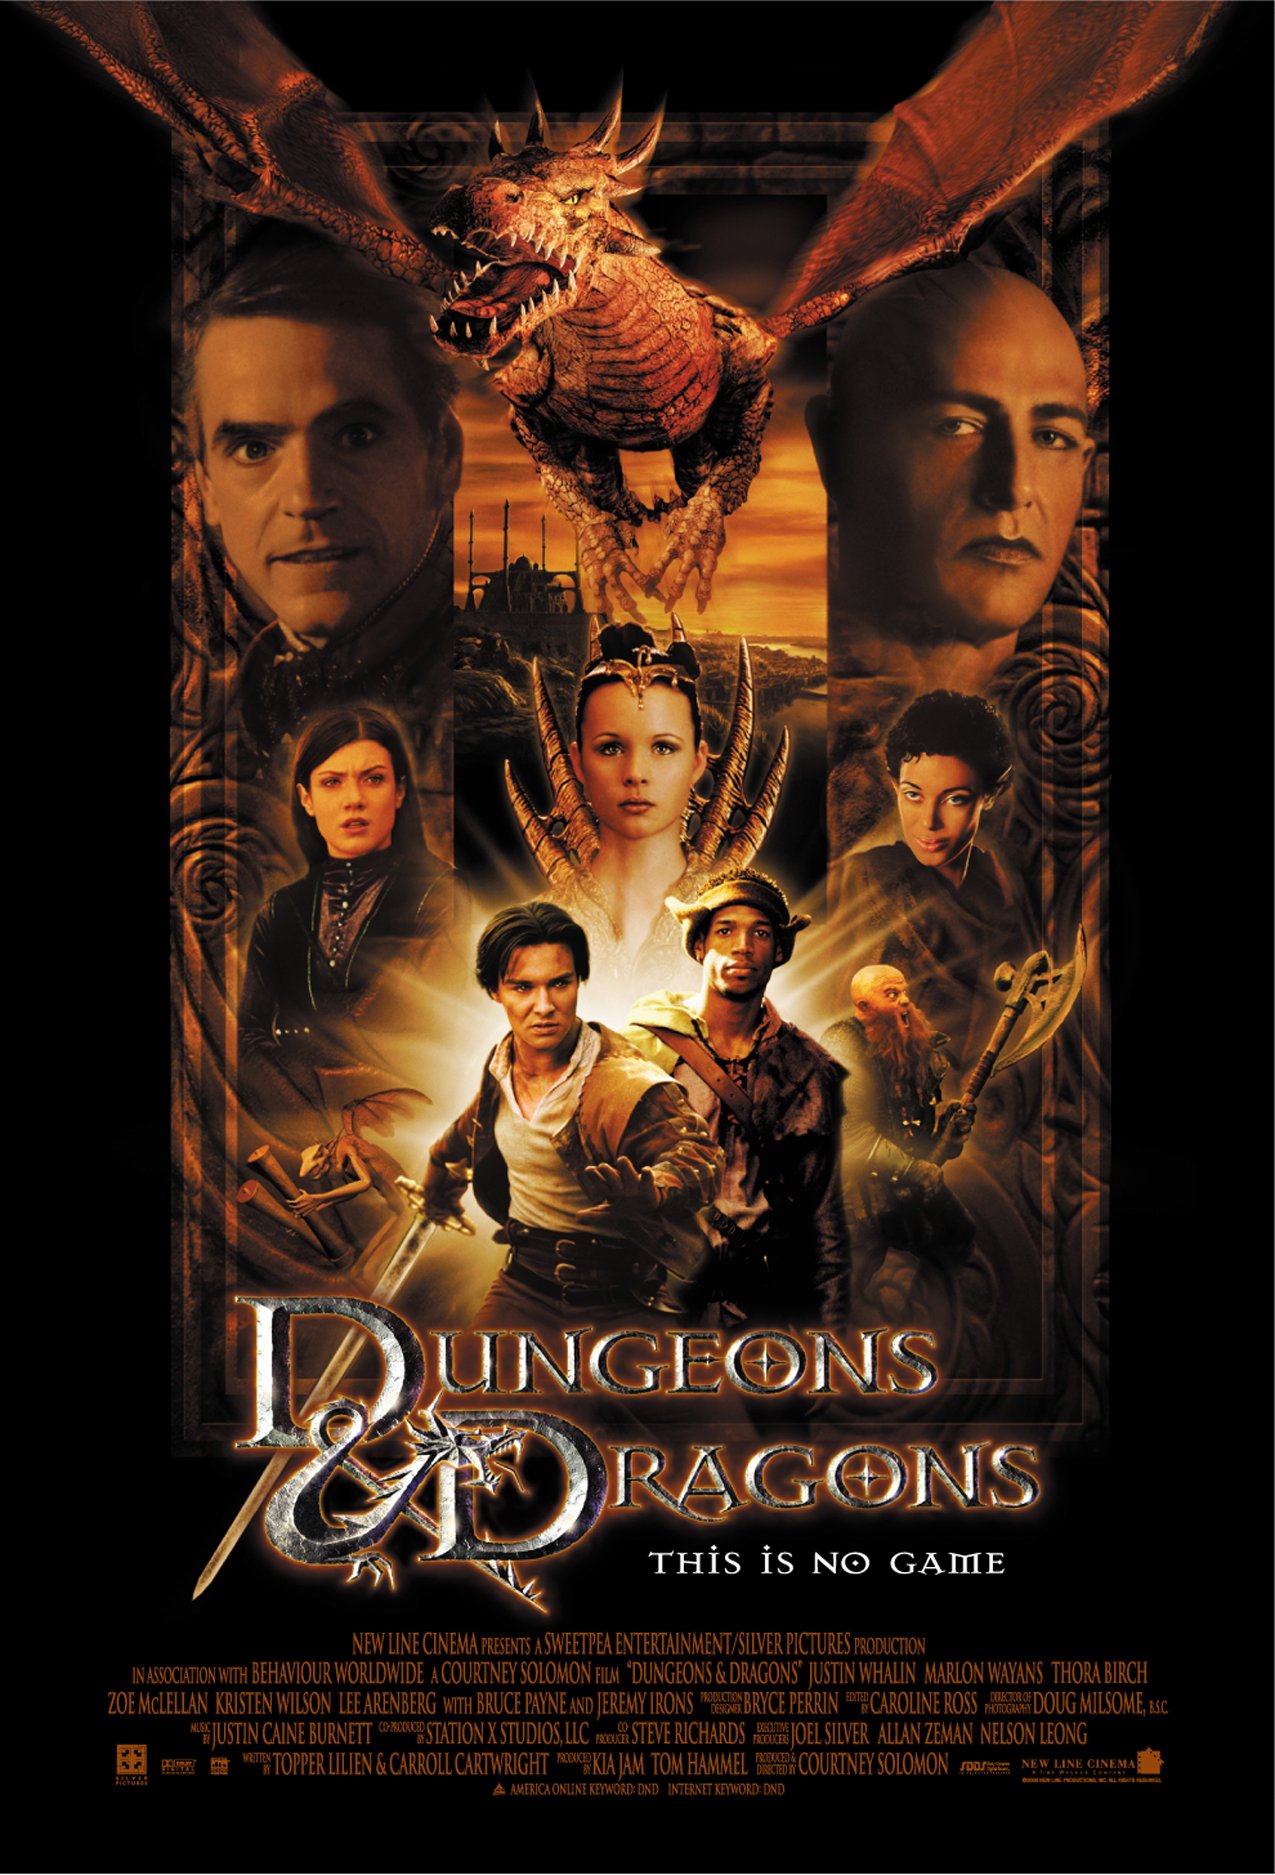 Plakat zum Film: Dungeons & Dragons